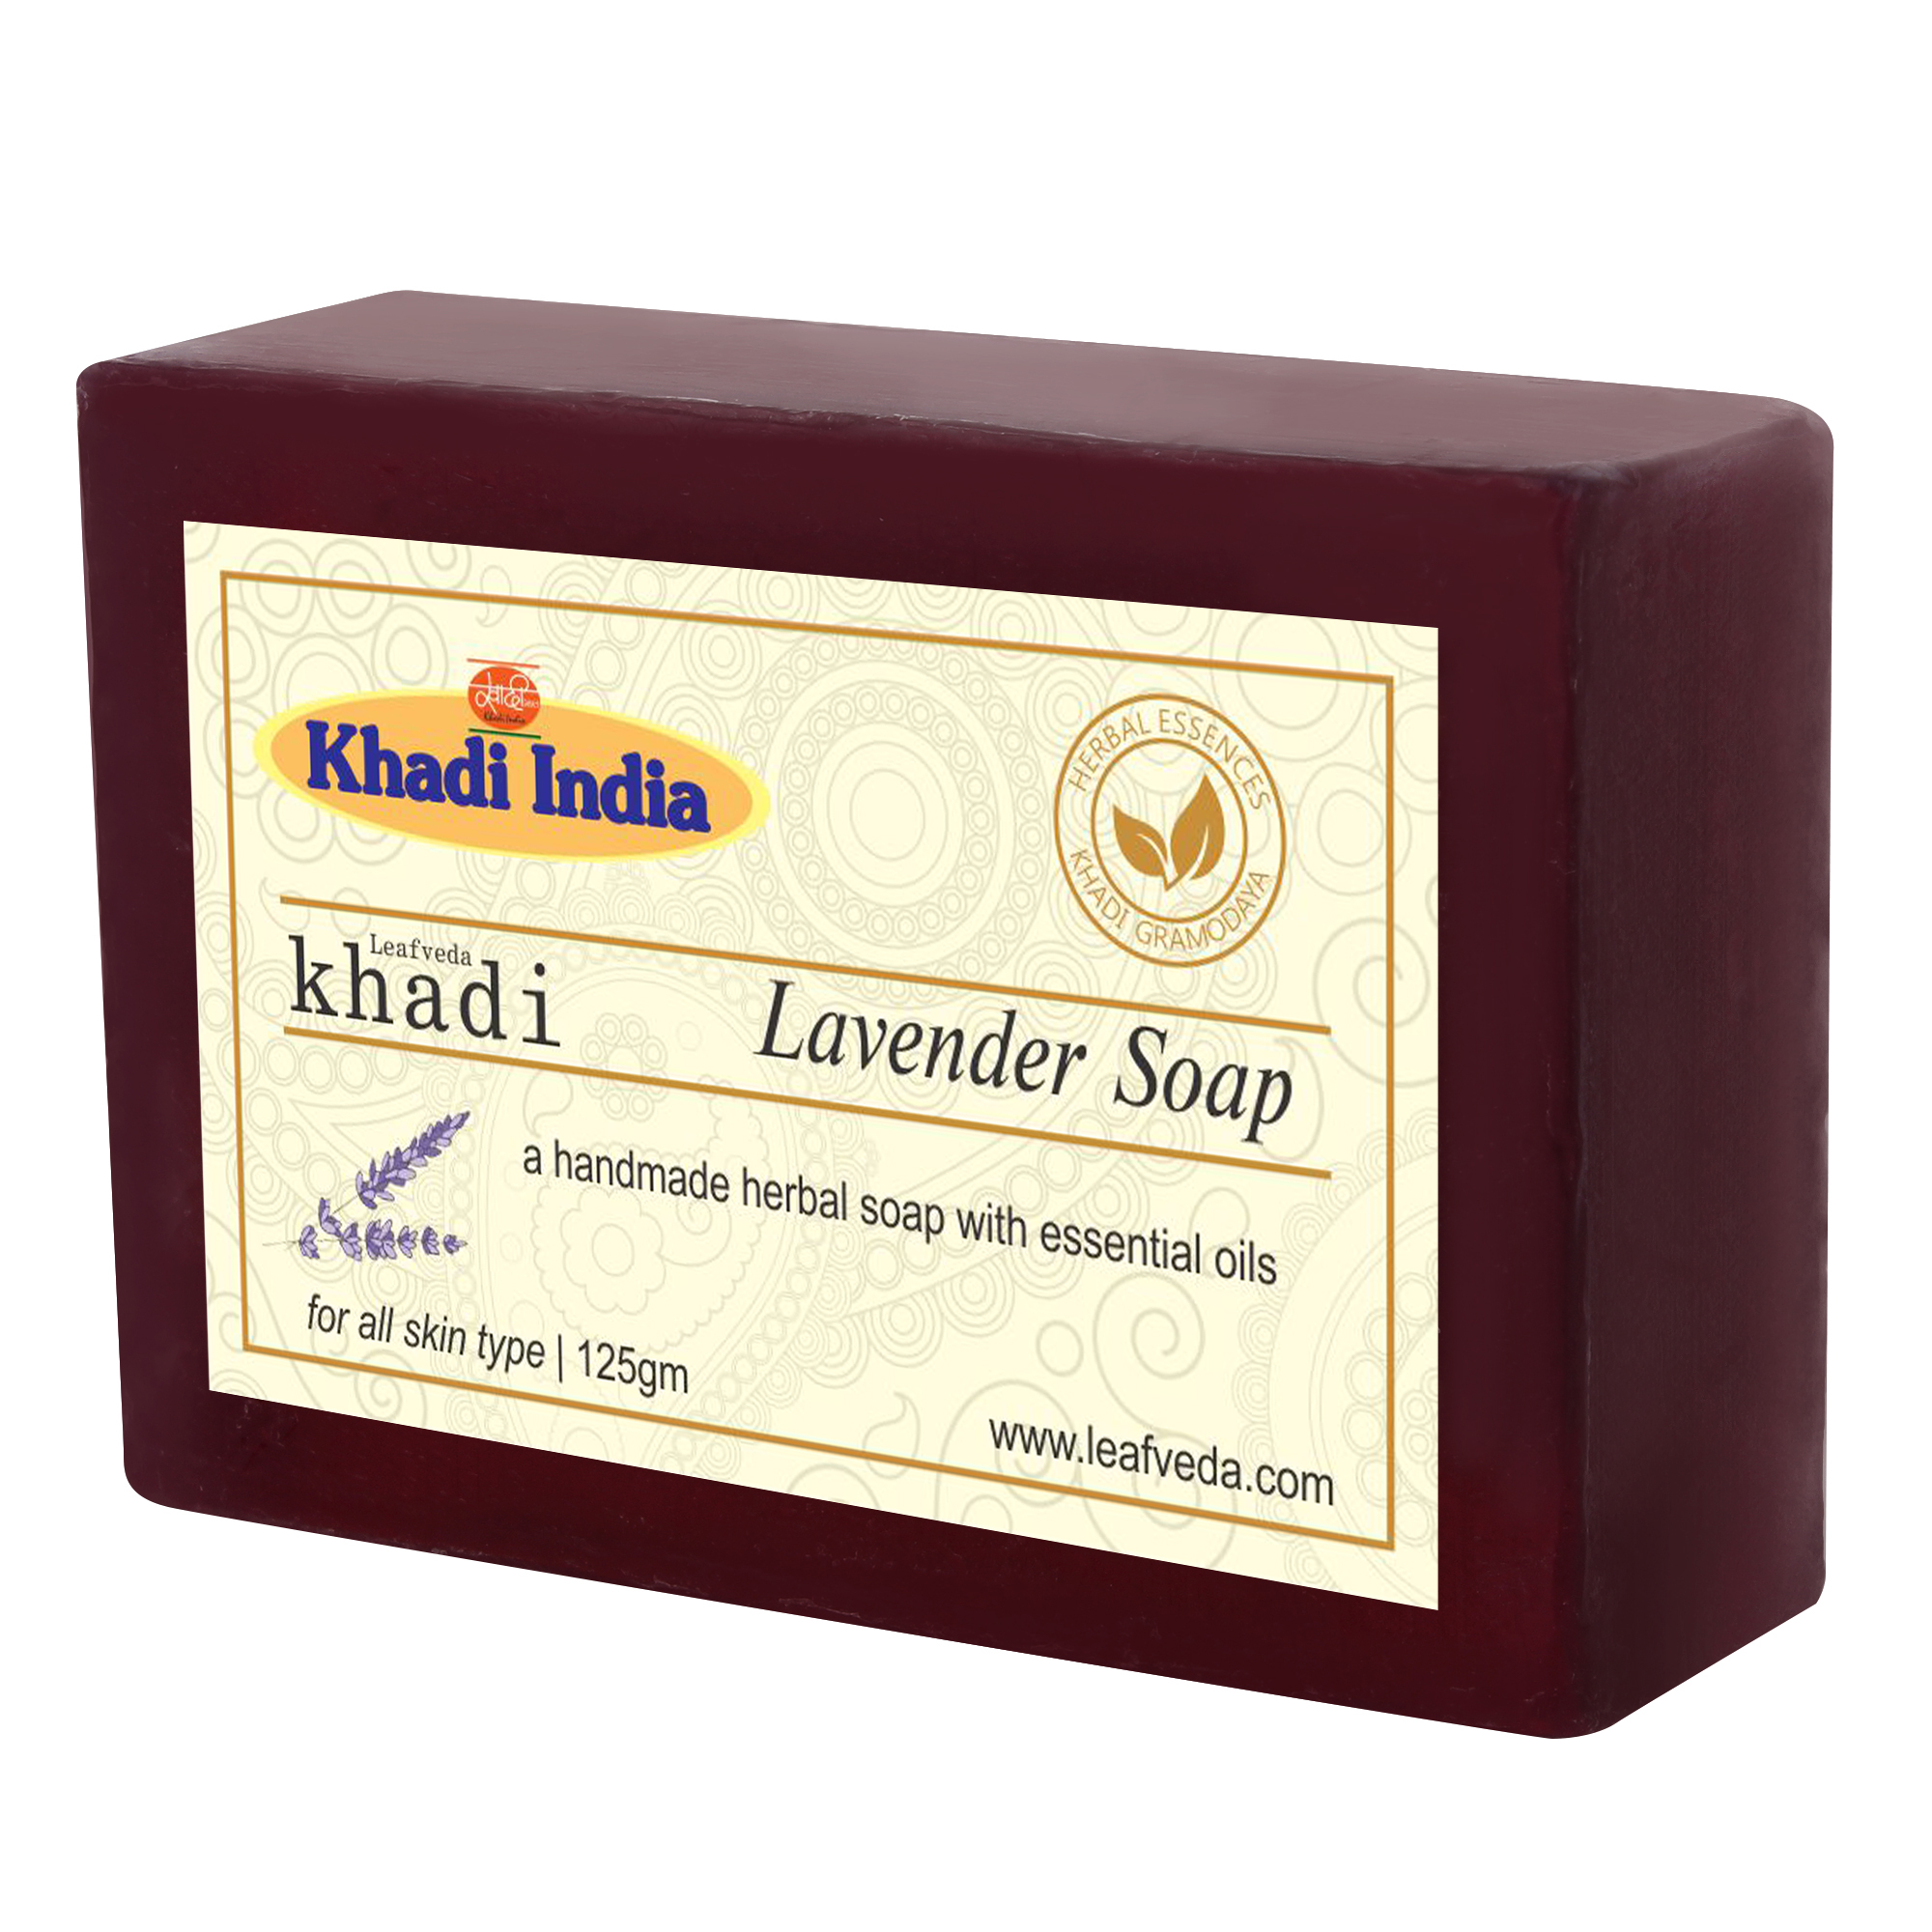 Khadi Leafveda Lavender Soap